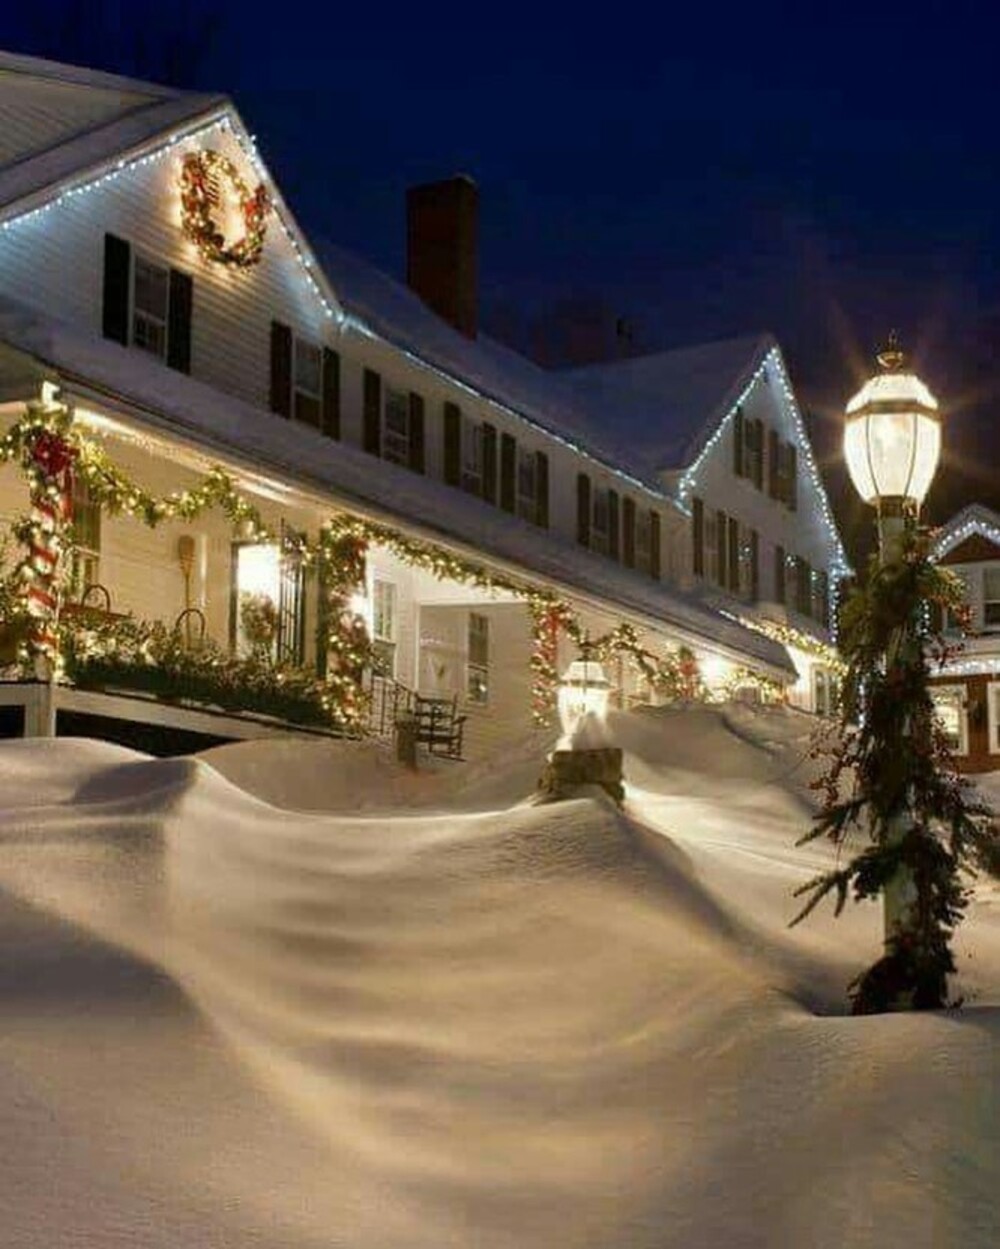 christmas lights on house exterior 21